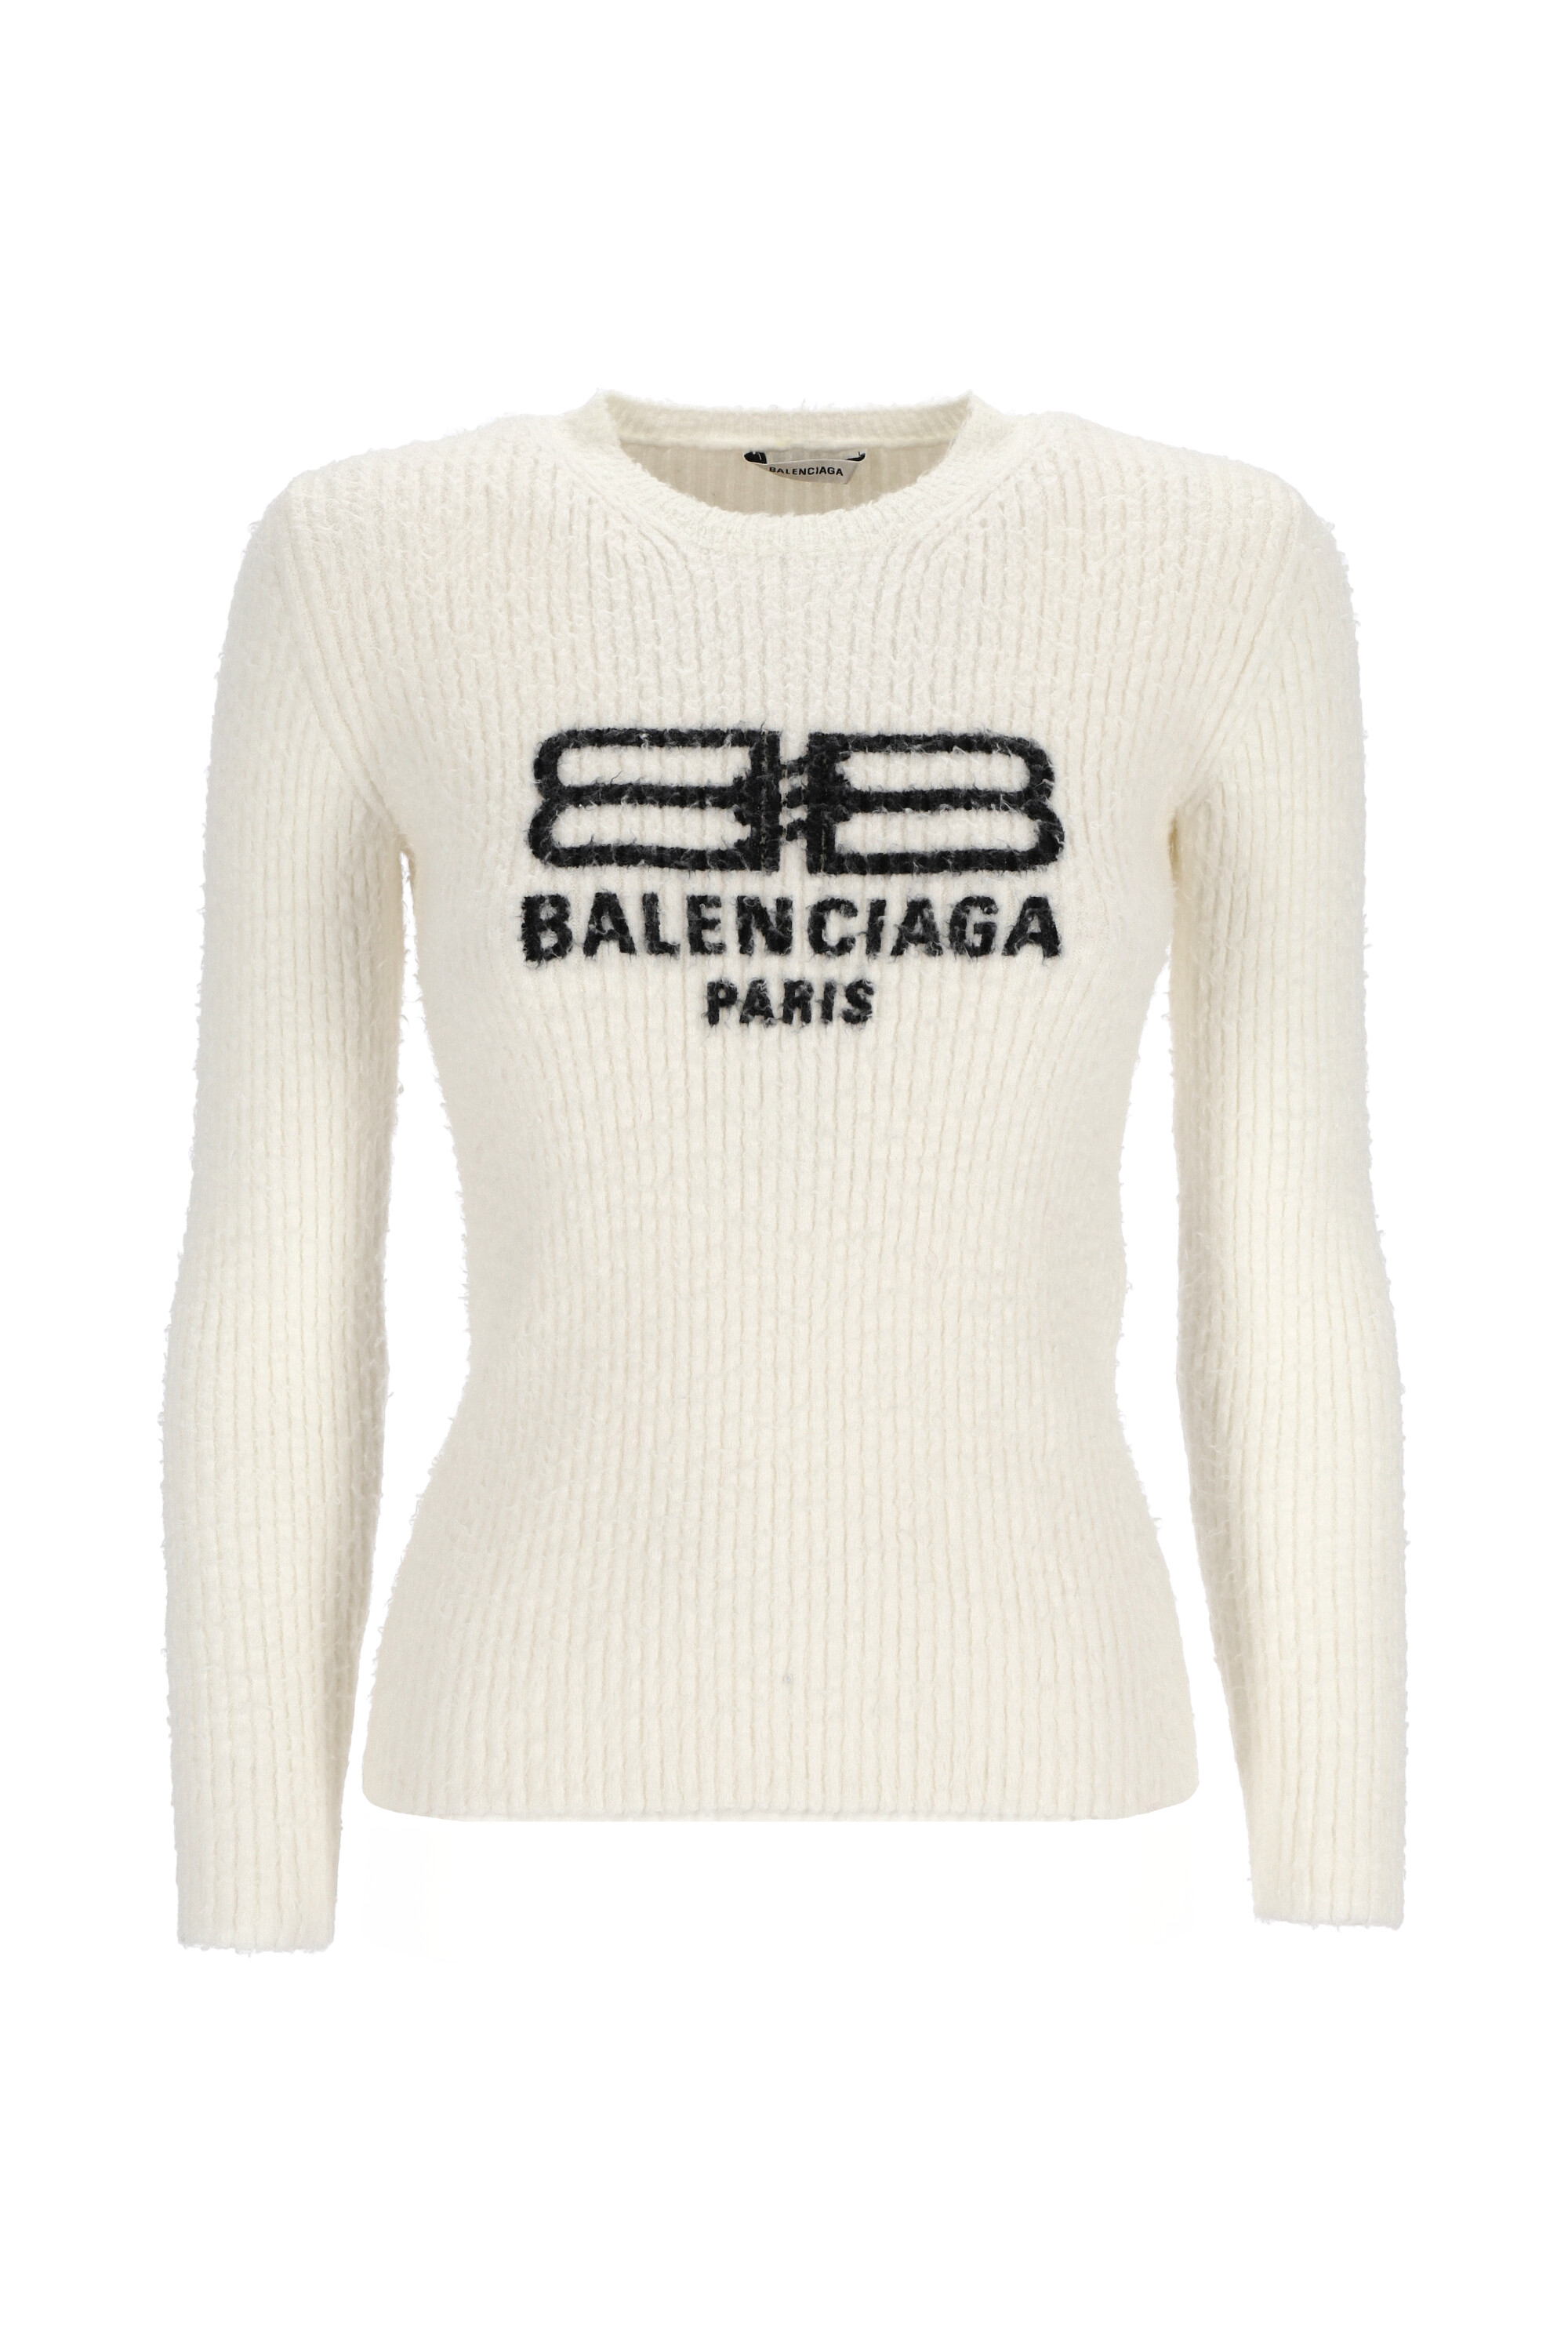 Balenciaga 白色女士针织衫/毛衣 706311-t3250-9040 In Neutral